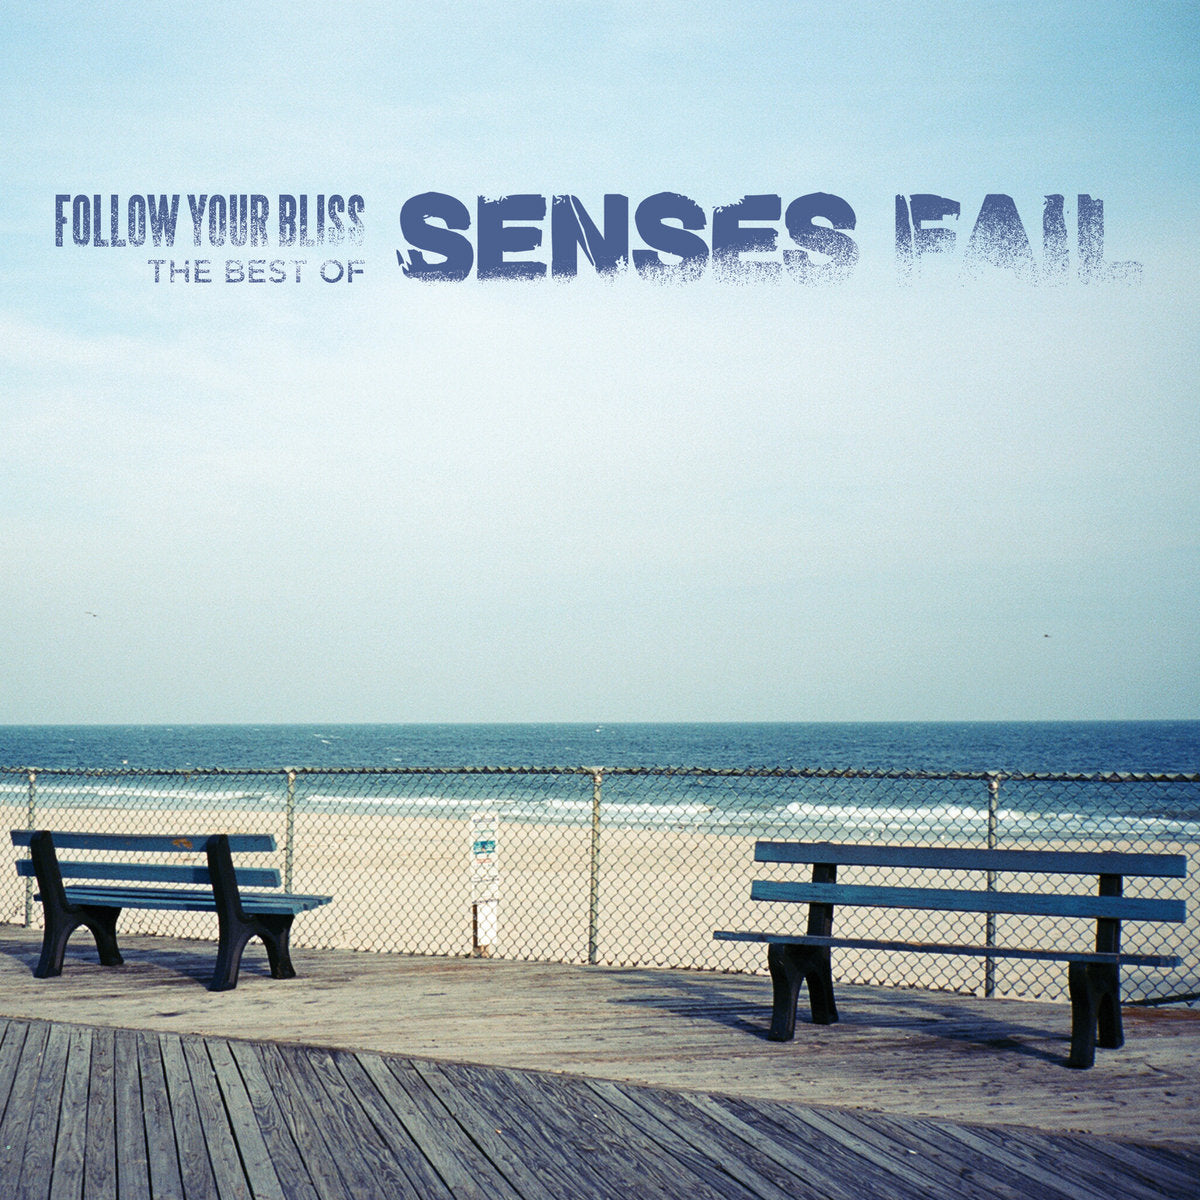 Senses Fail "Follow Your Bliss: The Best Of Senses Fail" 2xCD